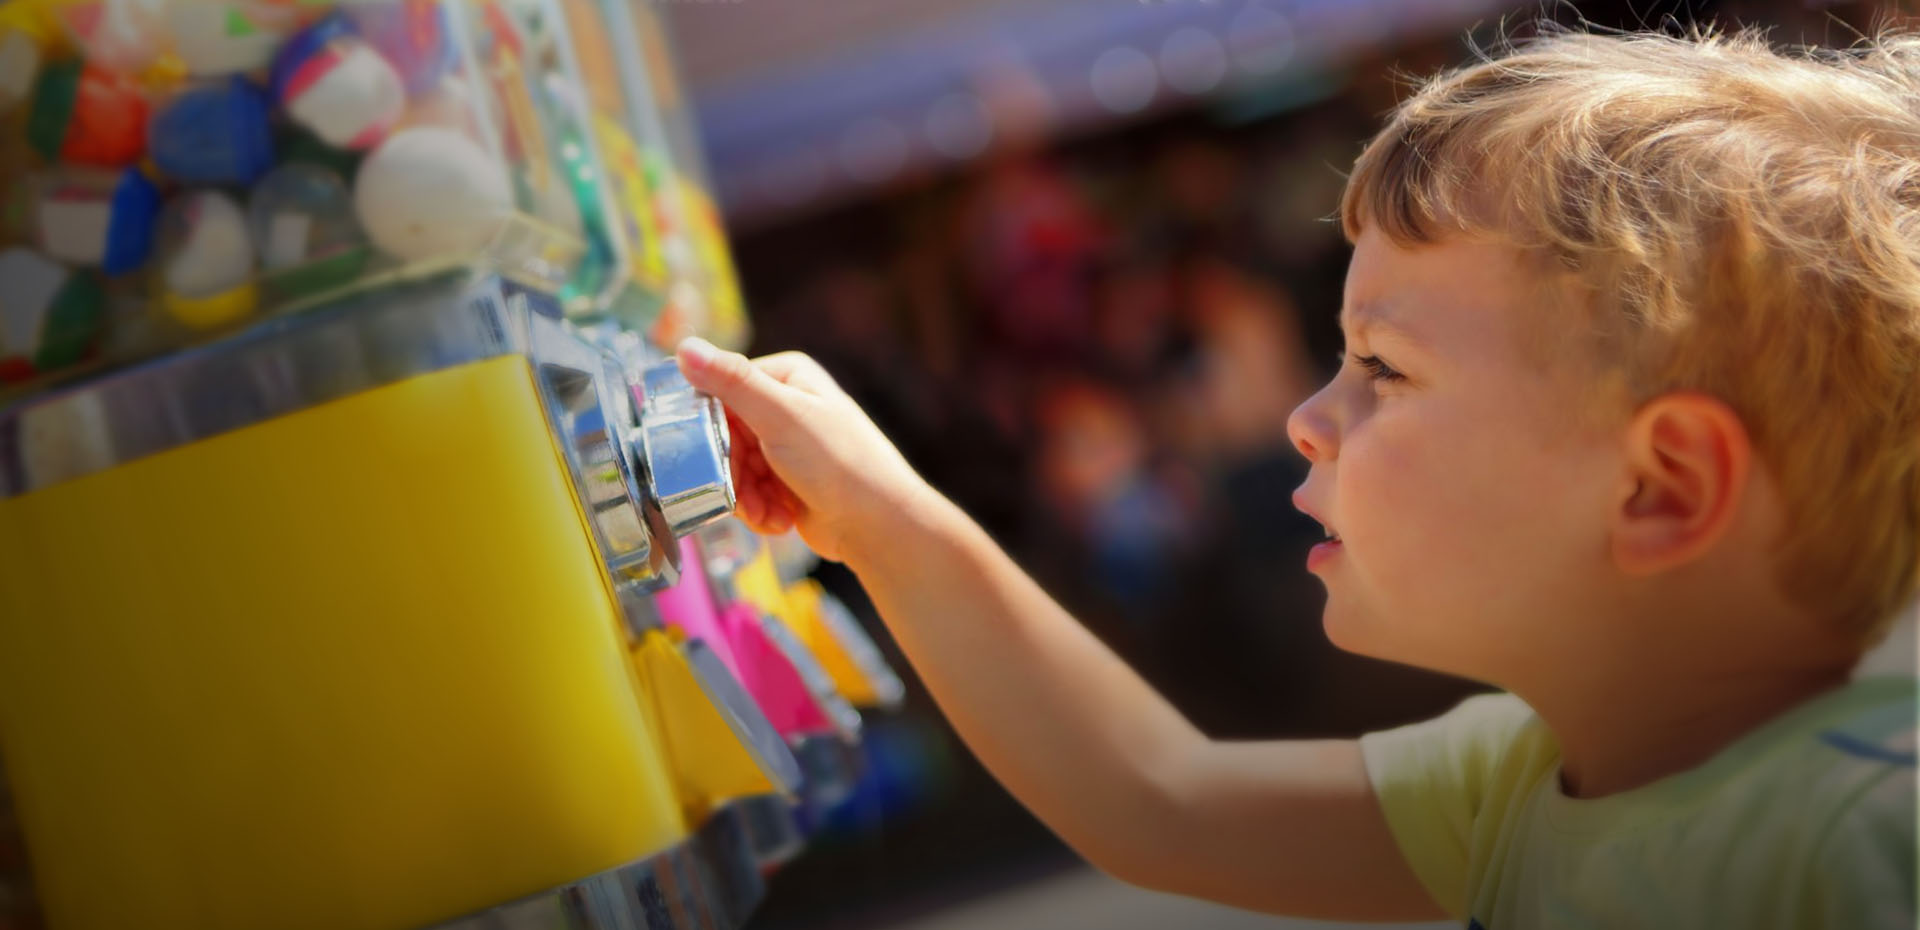 Installers Of Toys Vending Machines For Restaurants Market Harbrough